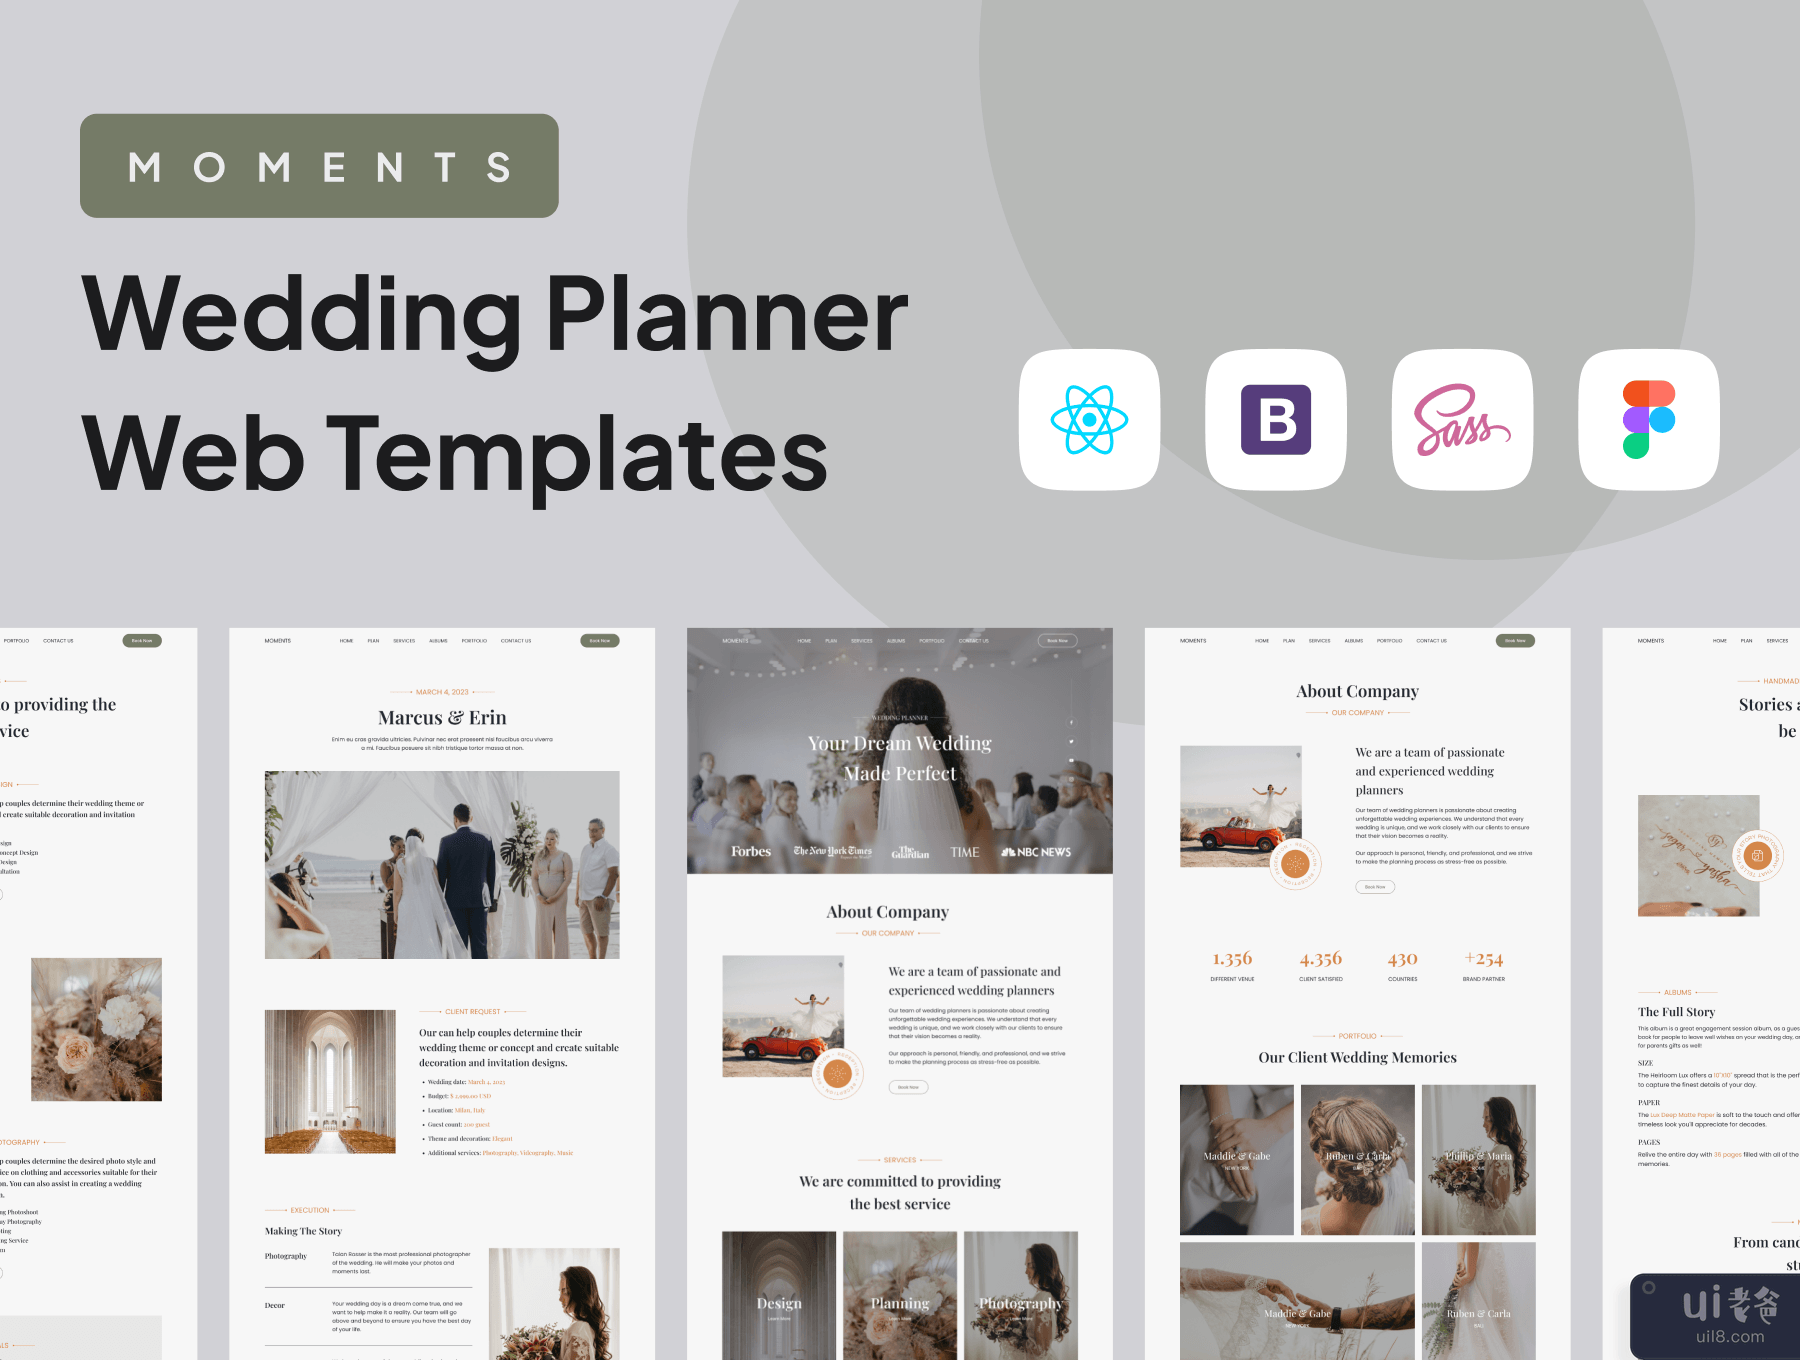 时刻 - 婚礼策划网页模板 (Moments - Wedding Planner Web Templates)插图7